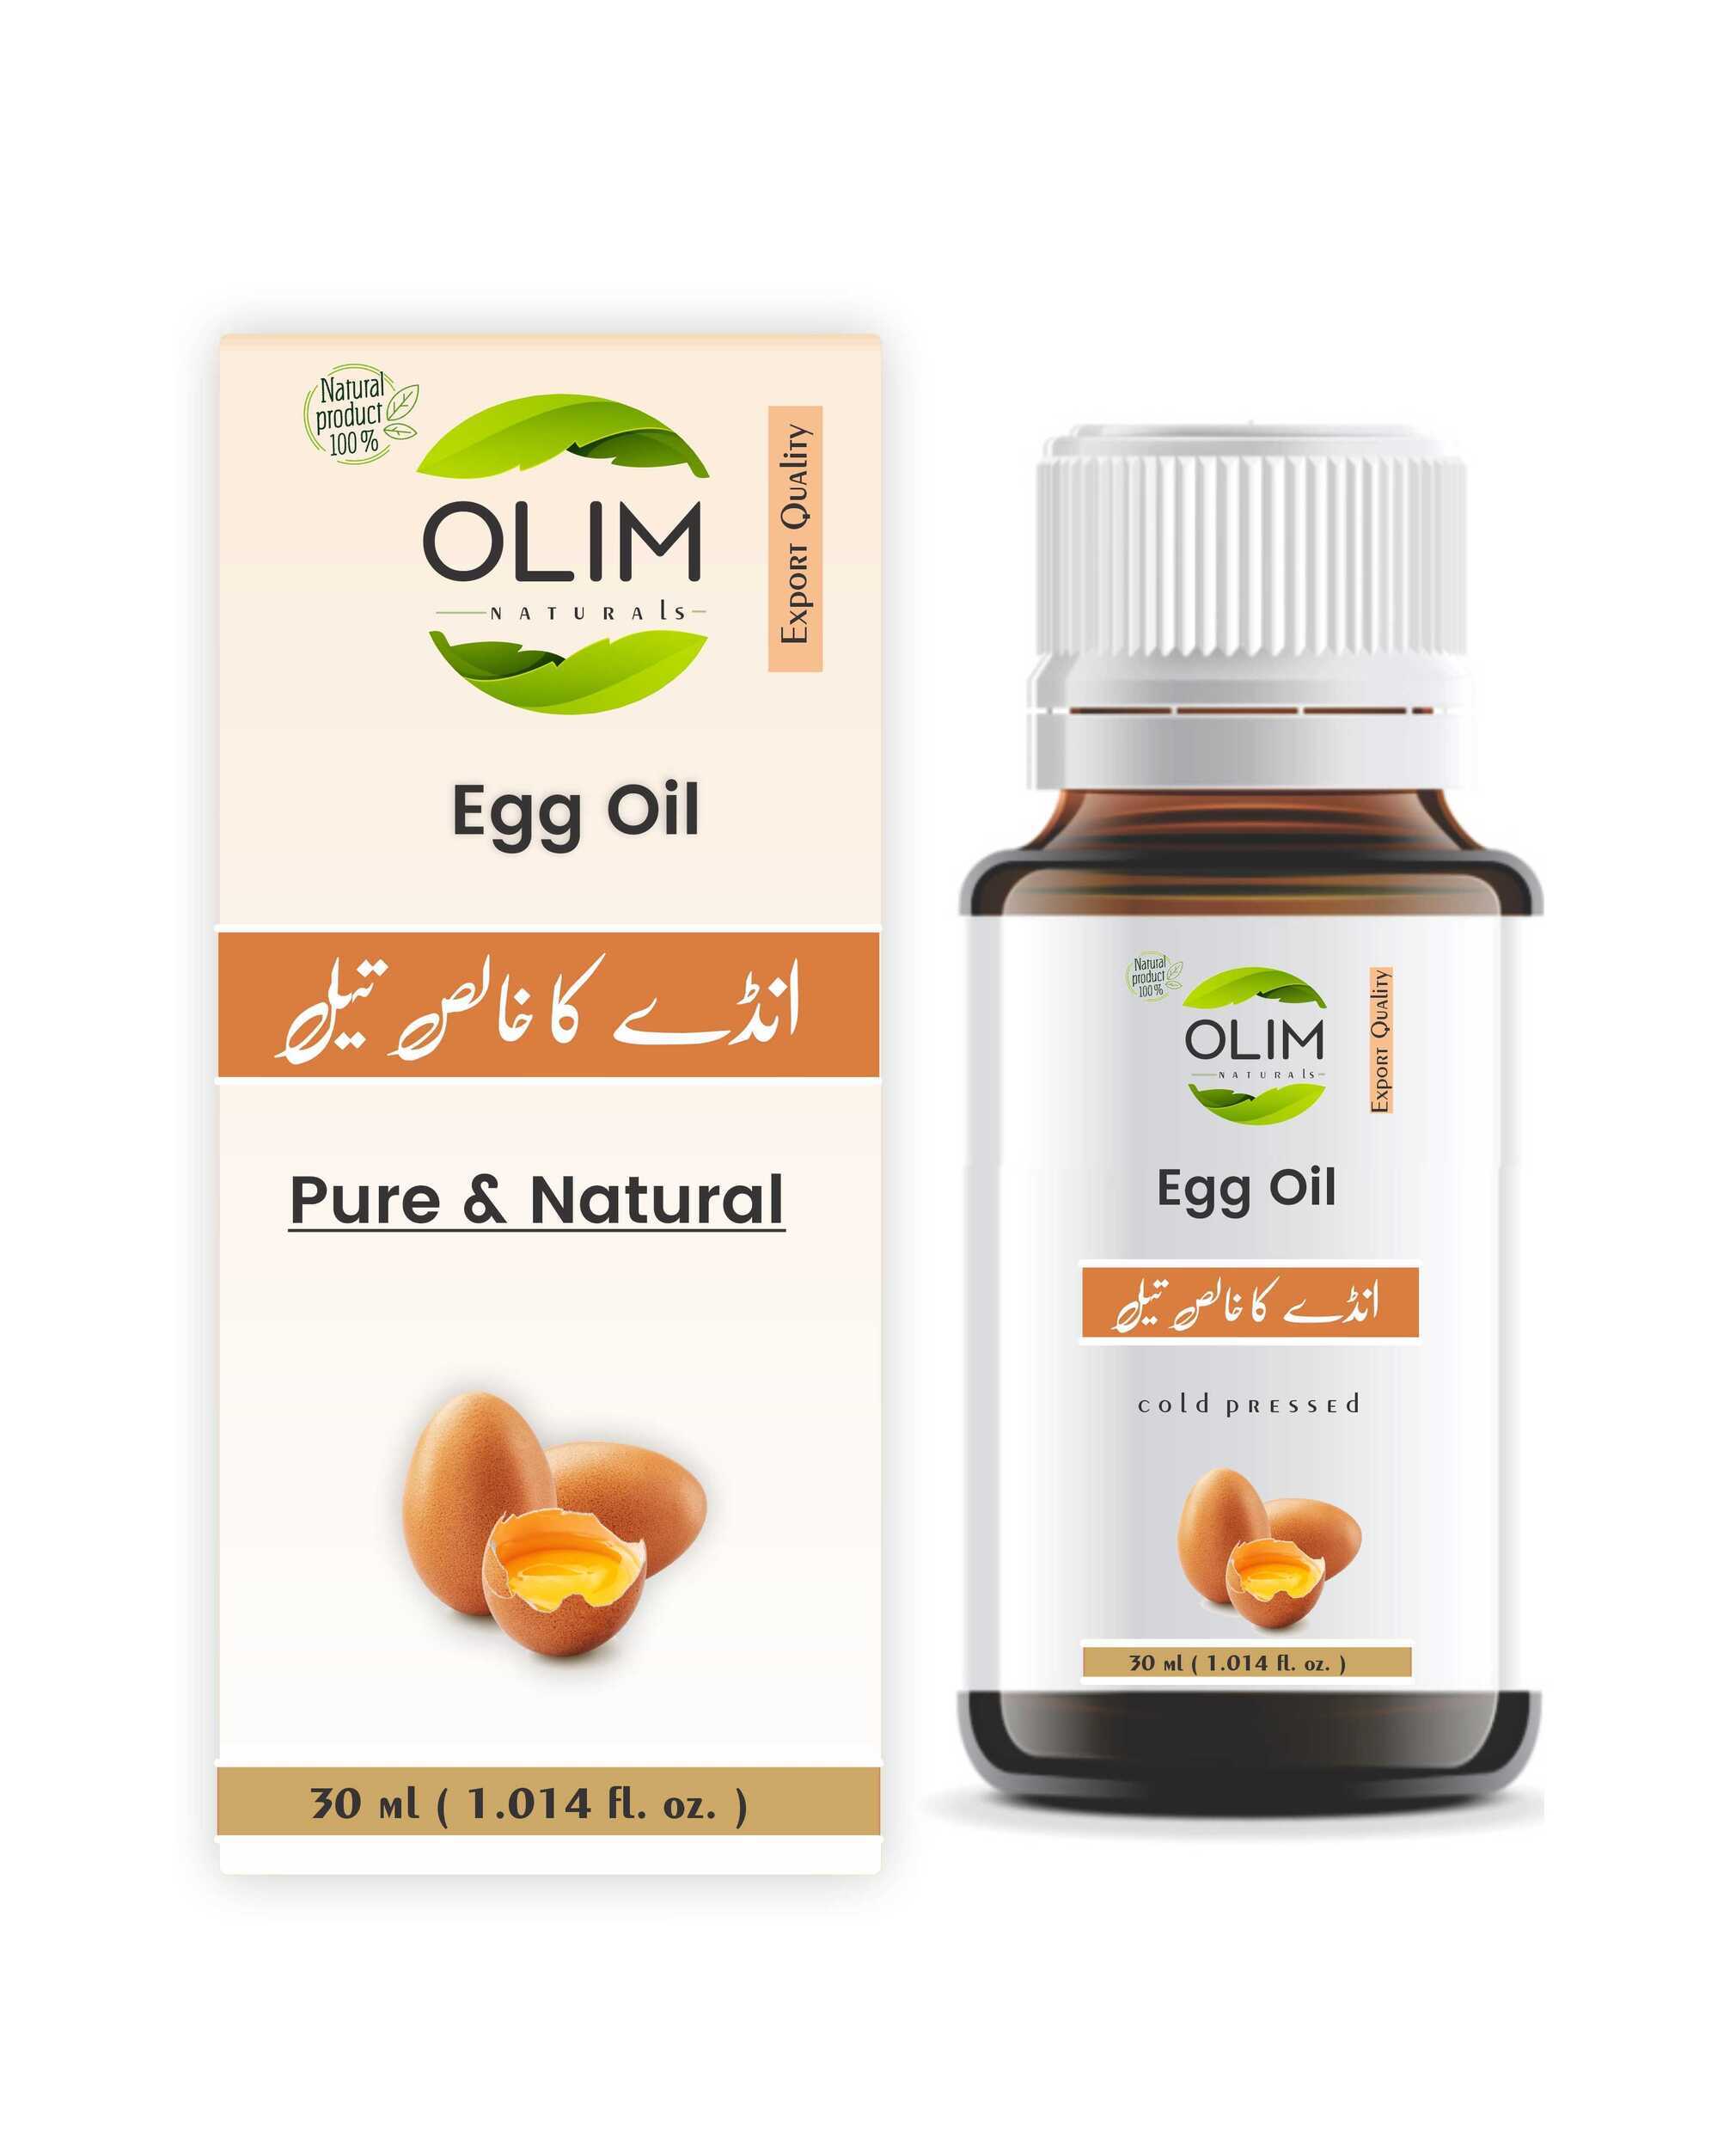 Buy Vanilla Body Massage Oil Online at Best Price in Pakistan - ChiltanPure